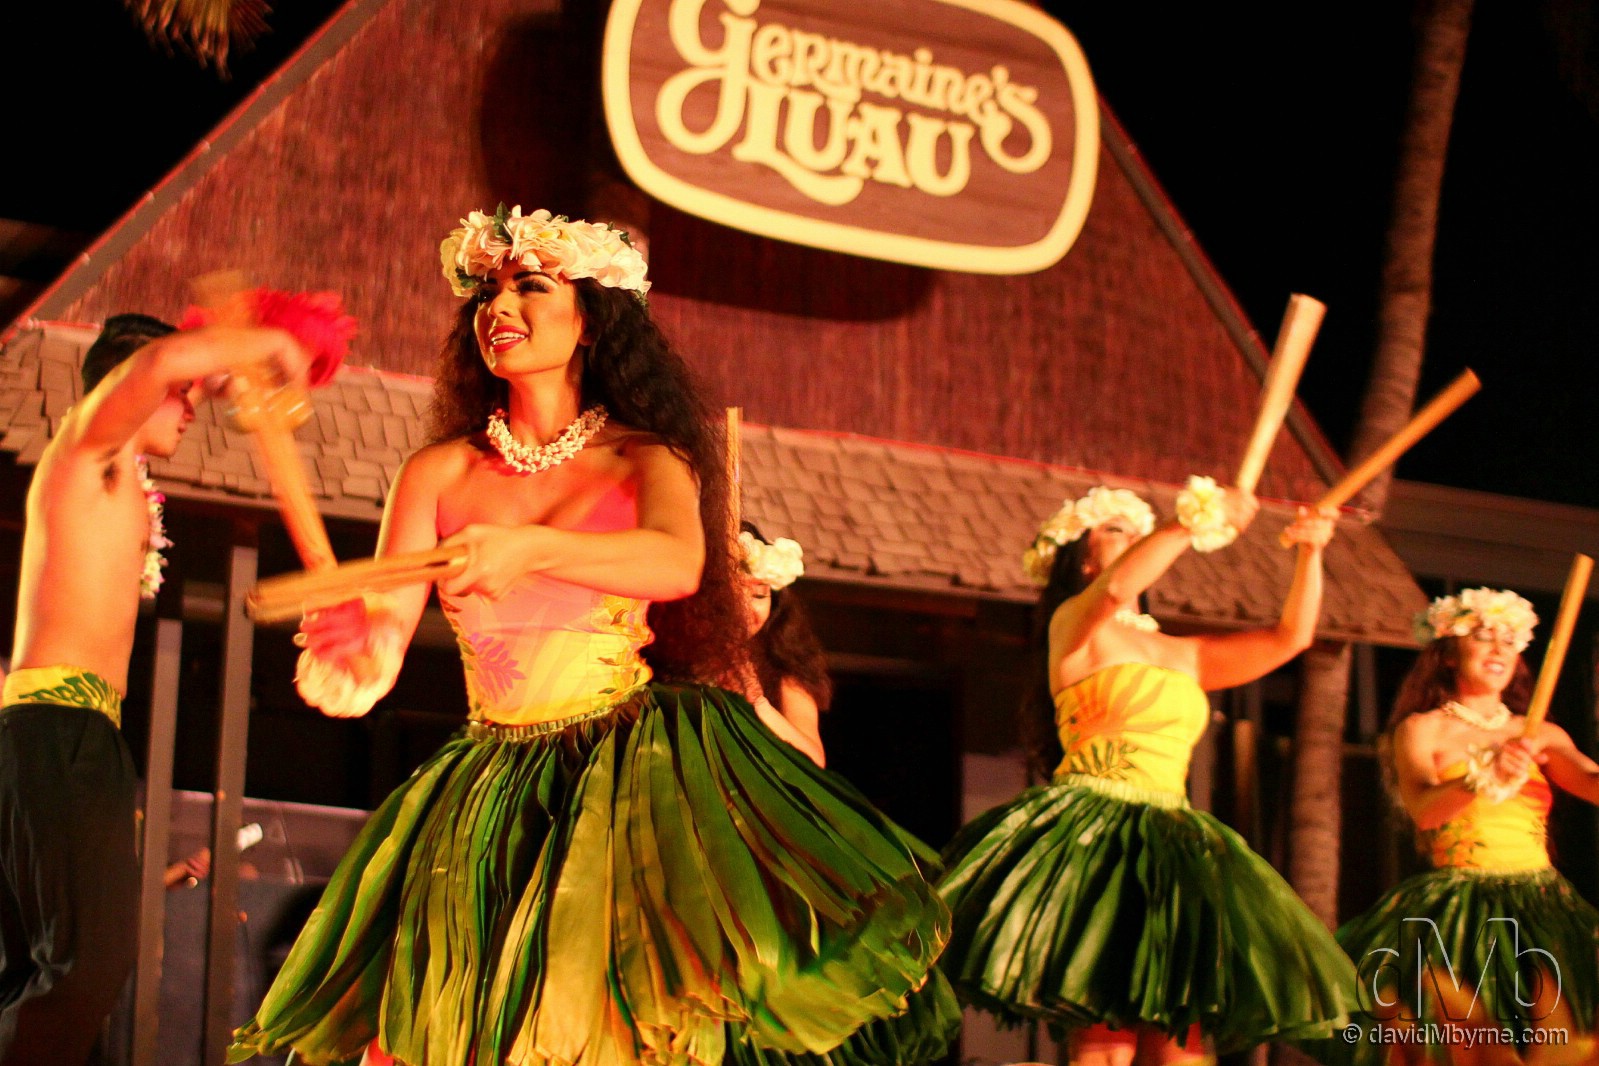 Kane (men) & wahine (women) dancers at Germaine’s Luau, Oahu, Hawaii, USA. February 27th 2013 (EOS 60D || Sigma 30mm f/1.4 || 30mm, 1/100sec, f/1.4, iso1250)